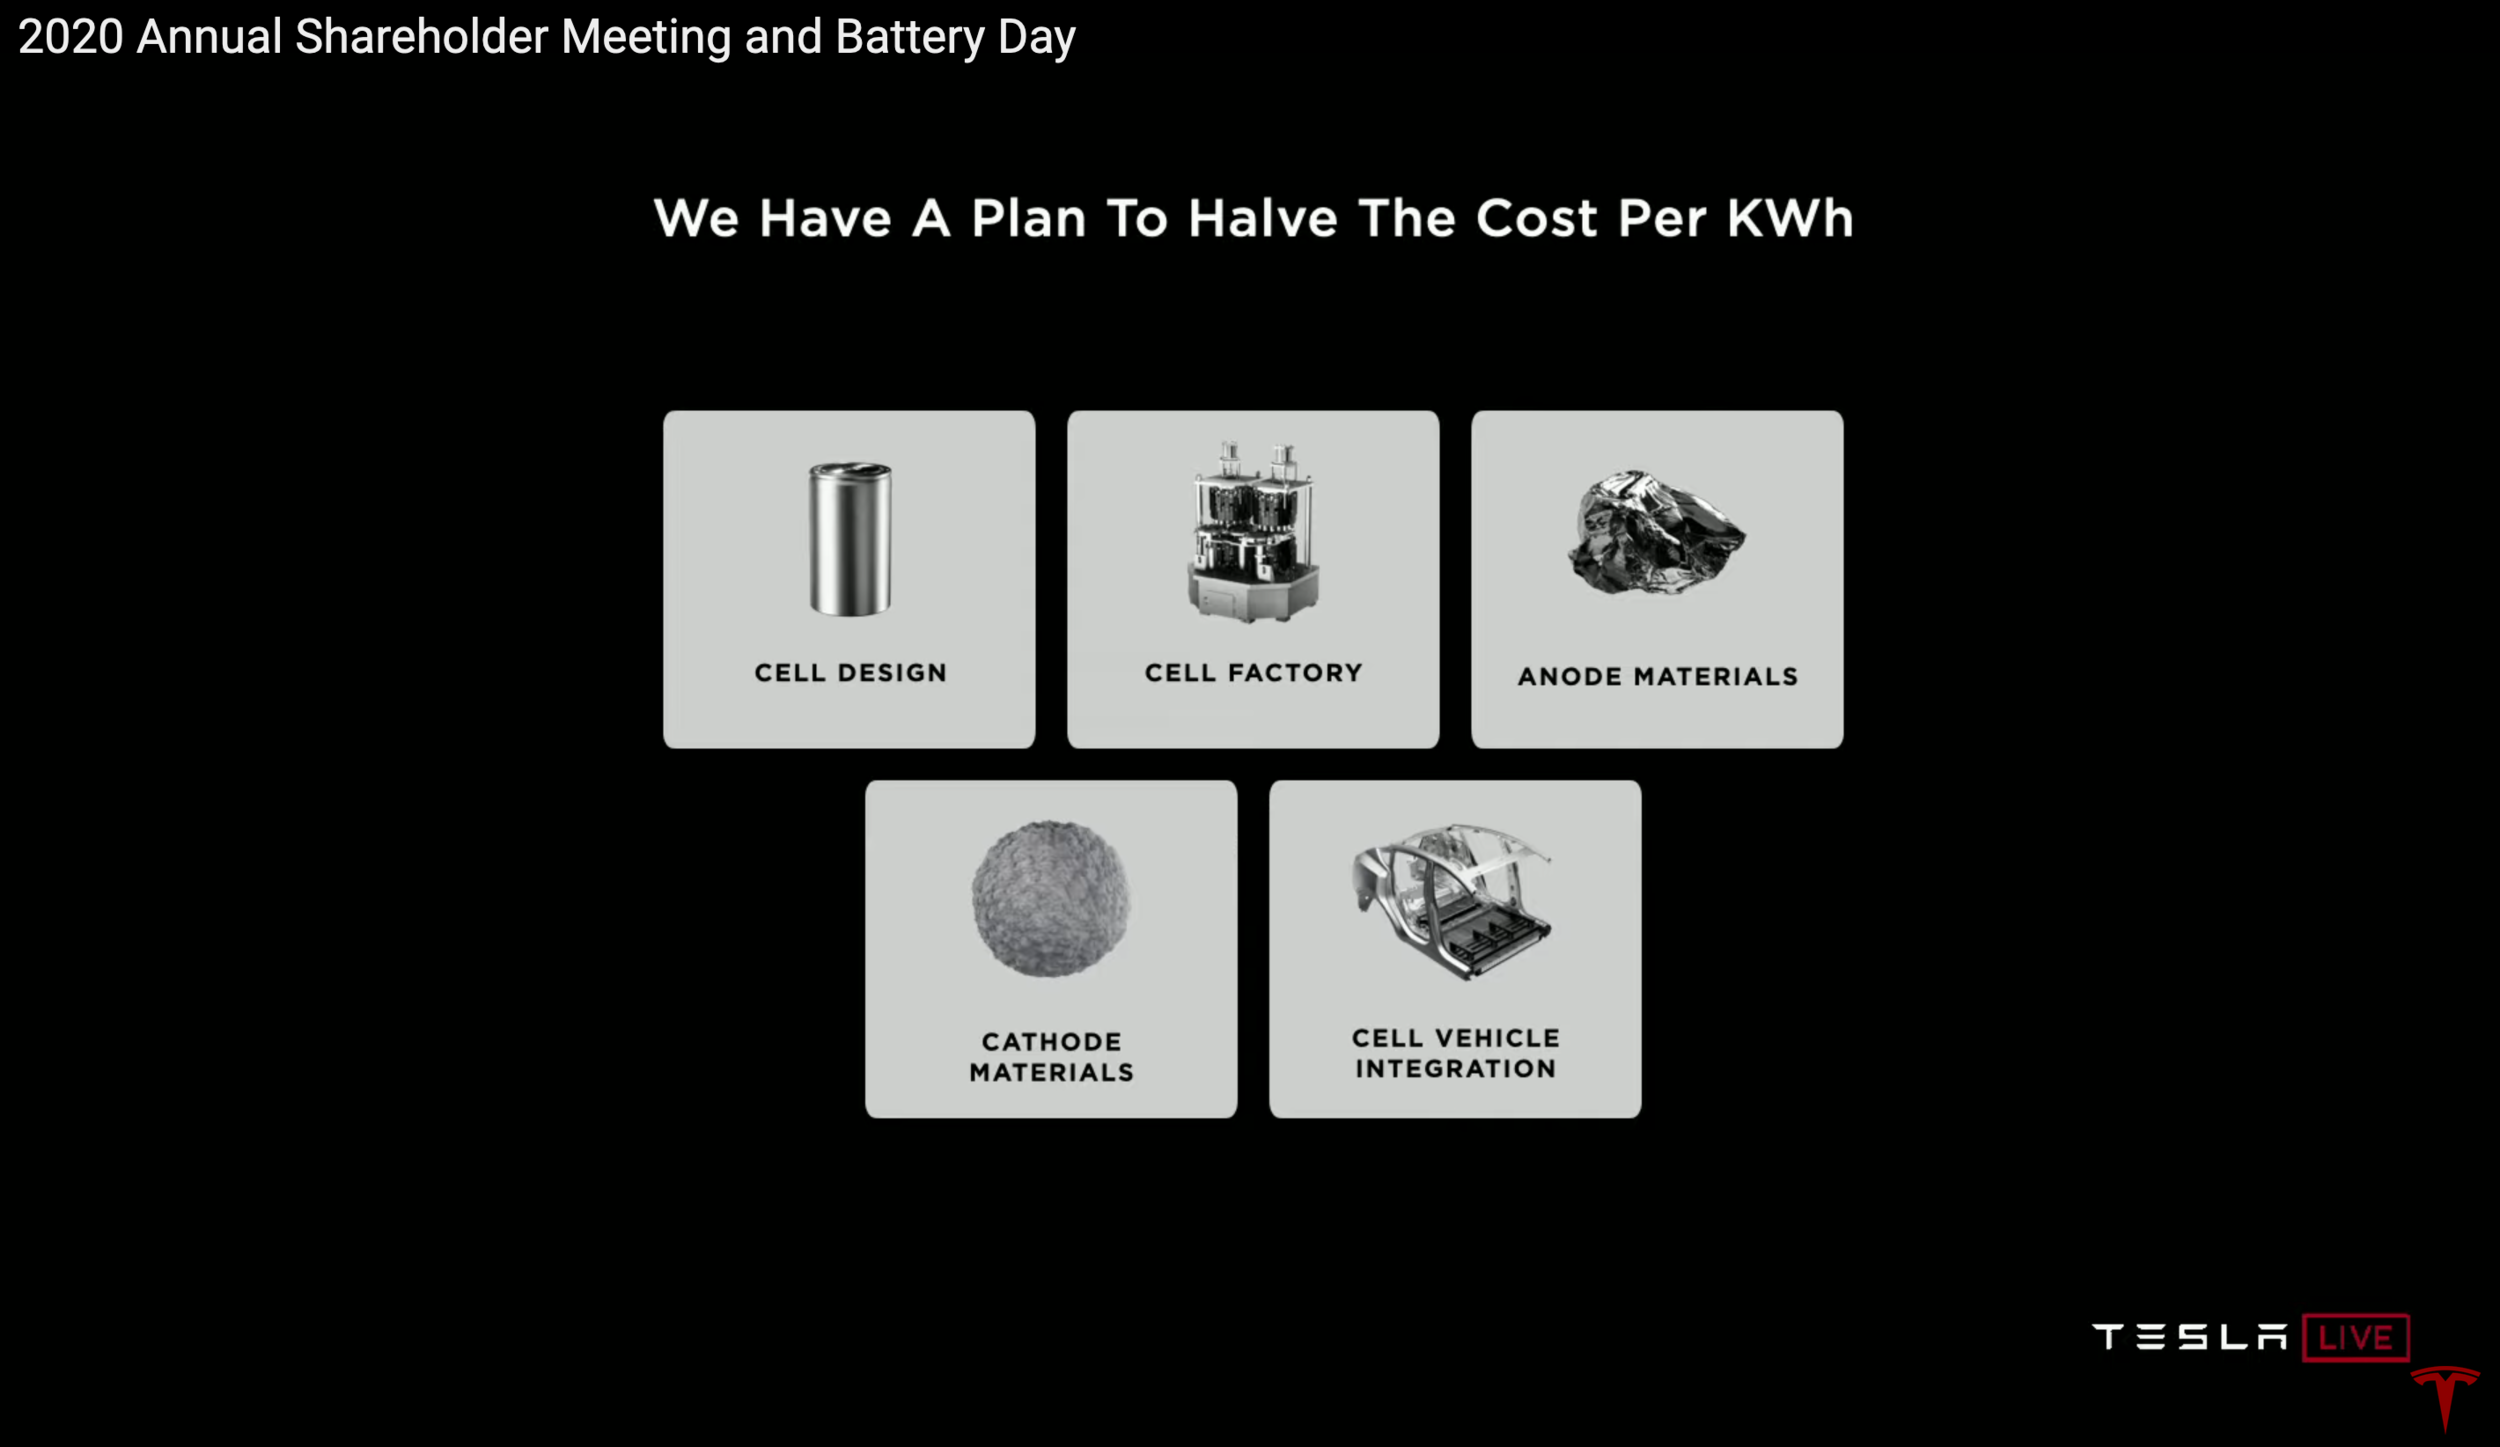 Tesla_Batt_Day_5pt_Plan.png